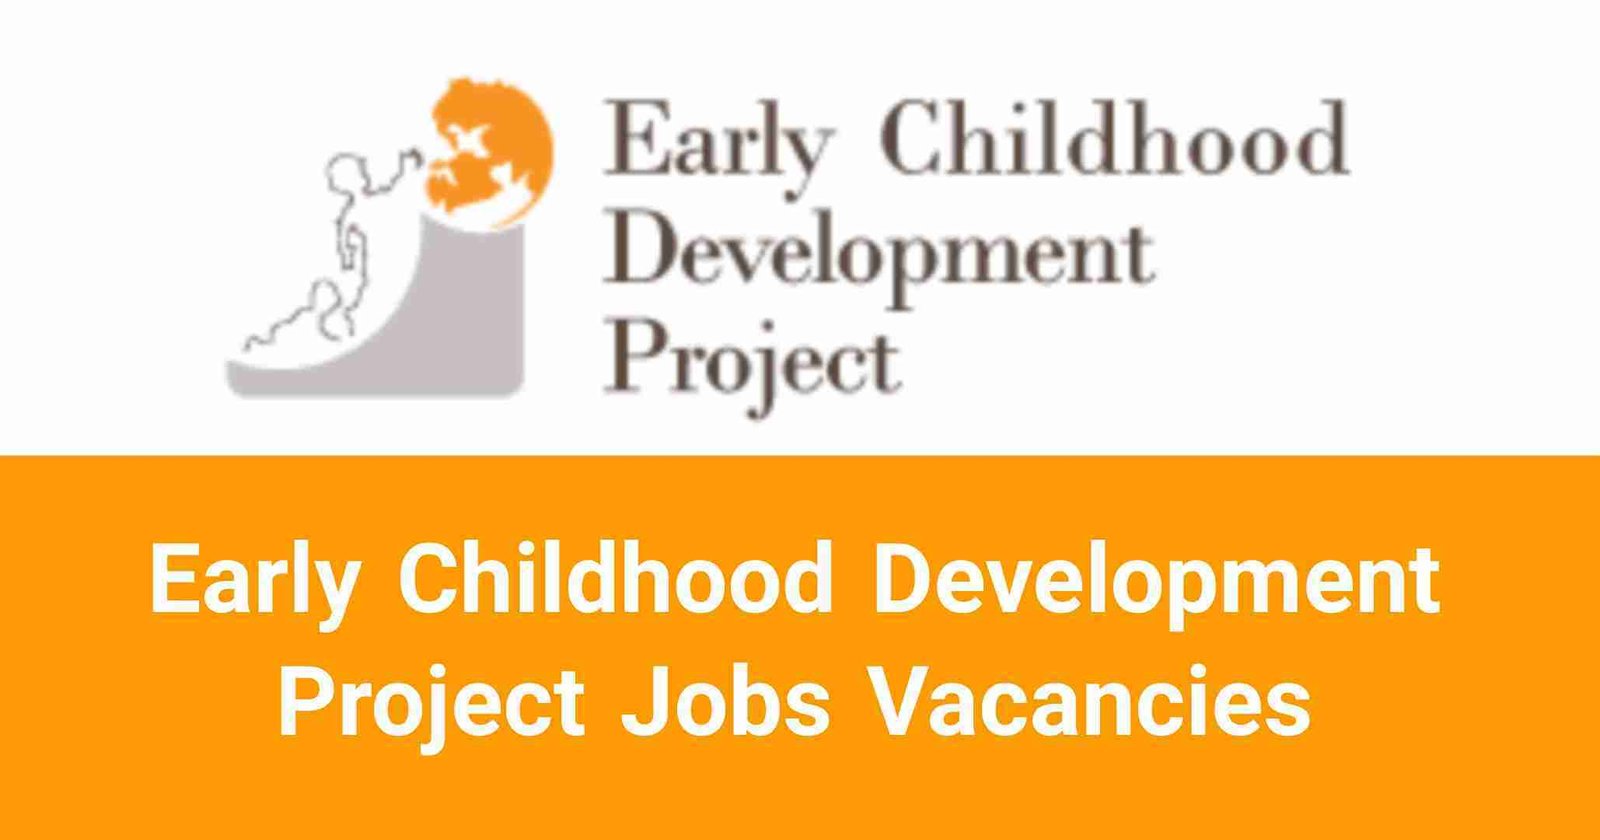 Early Childhood Development Project Jobs Vacancies